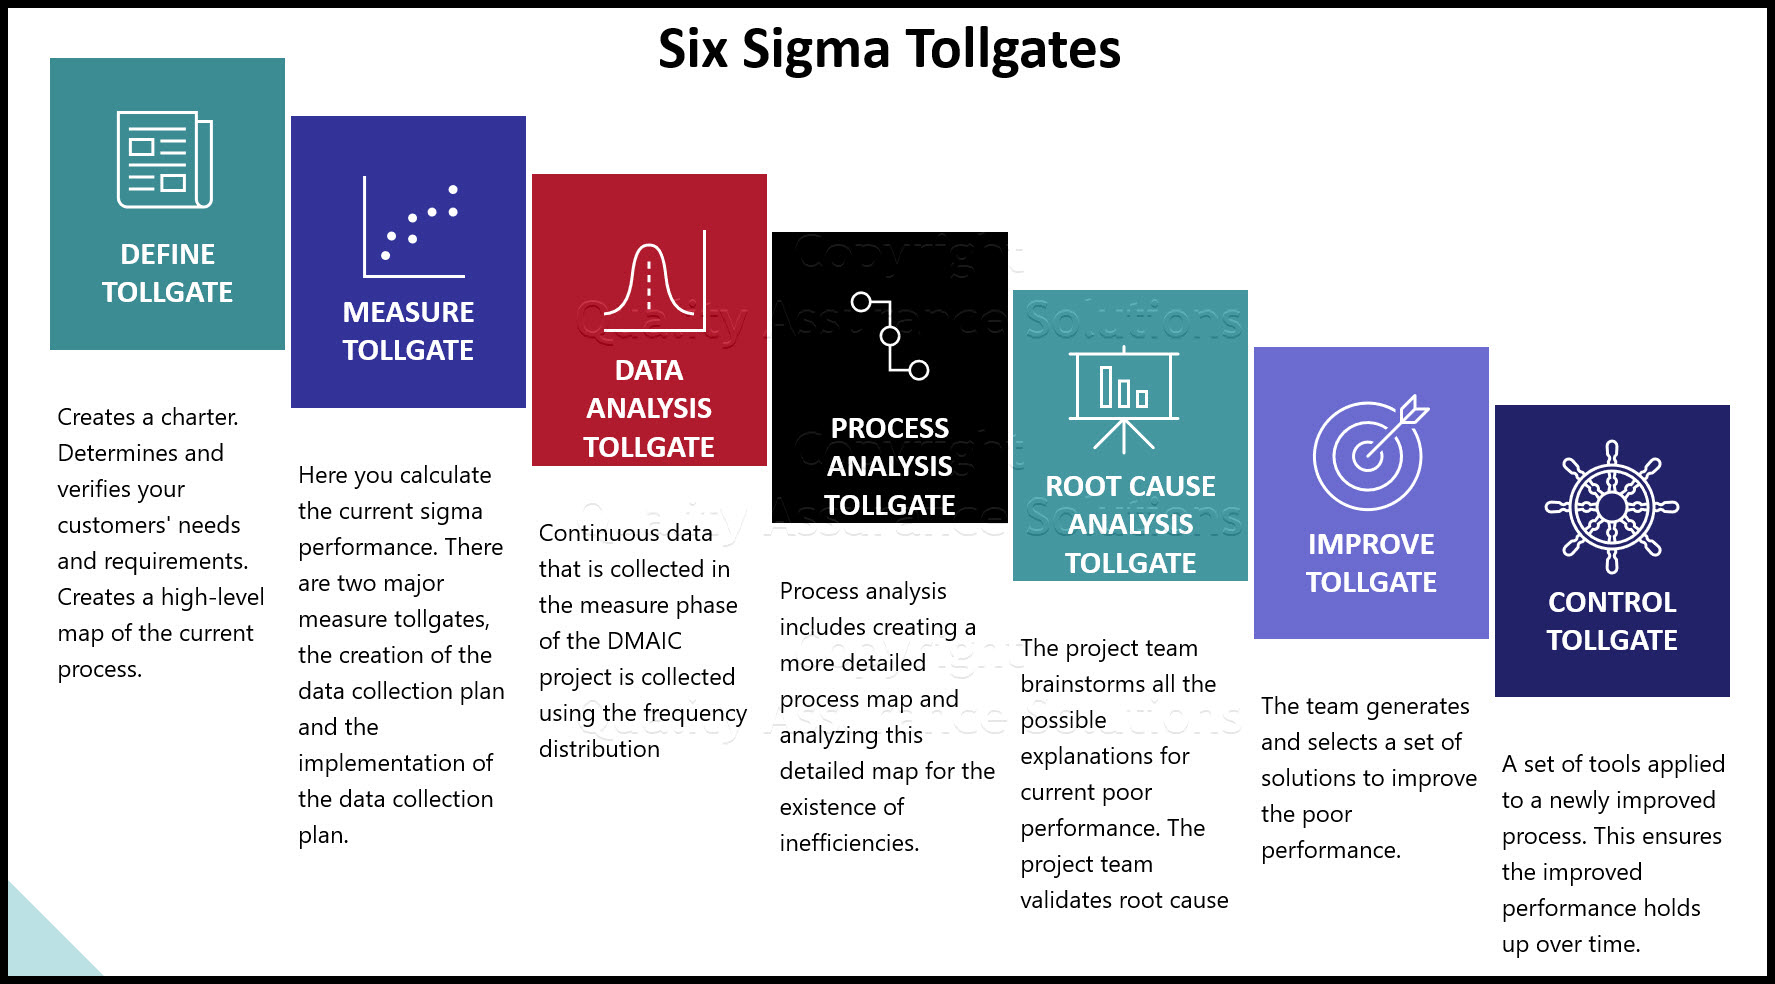 Six Sigma Tollgates